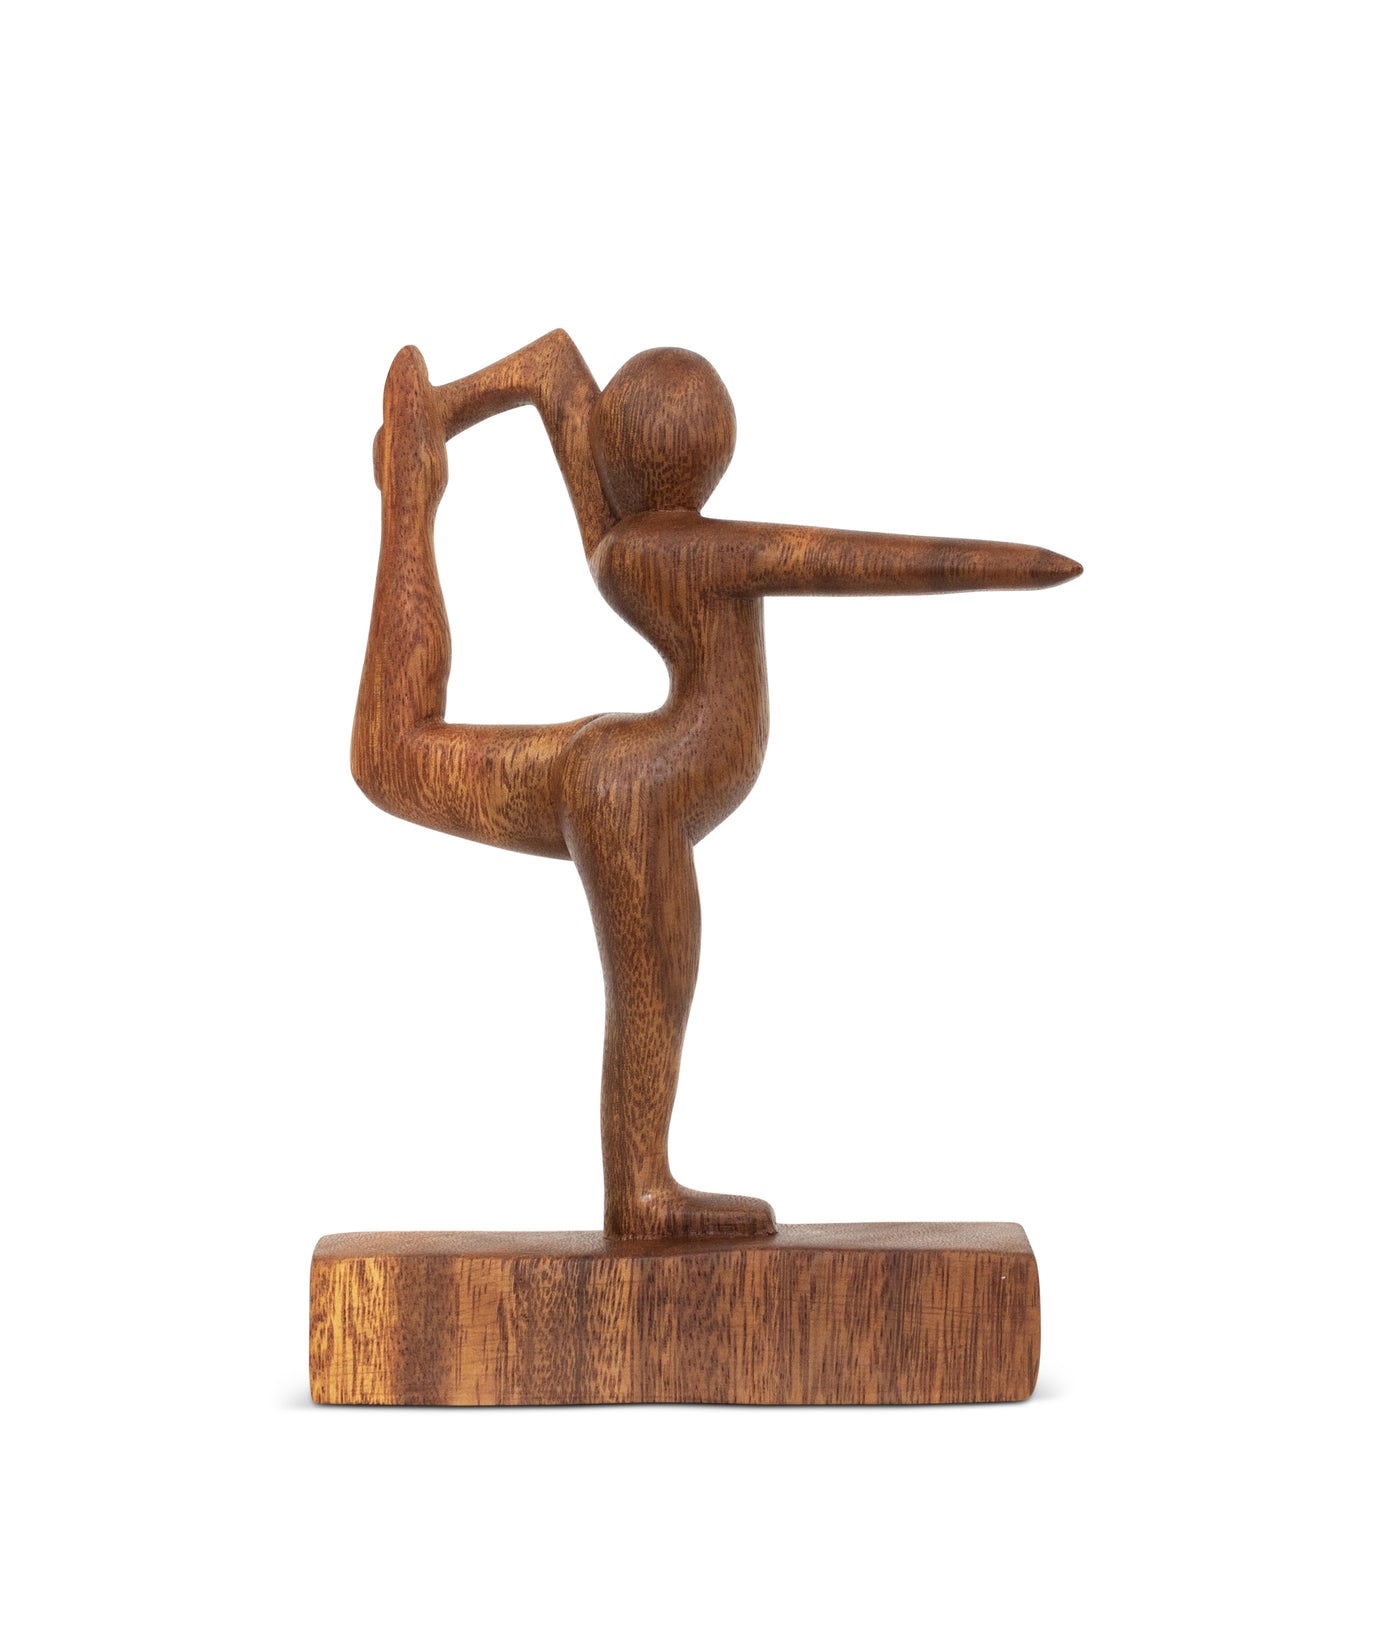 8" Wooden Handmade Mini Yoga Figurines, Yoga Pose Statue, Yoga Room Studio Decor, Mindful Home Decor Yogi Gift, Decorative Shelf Decor Objects - Dancer Pose - Arm Variation